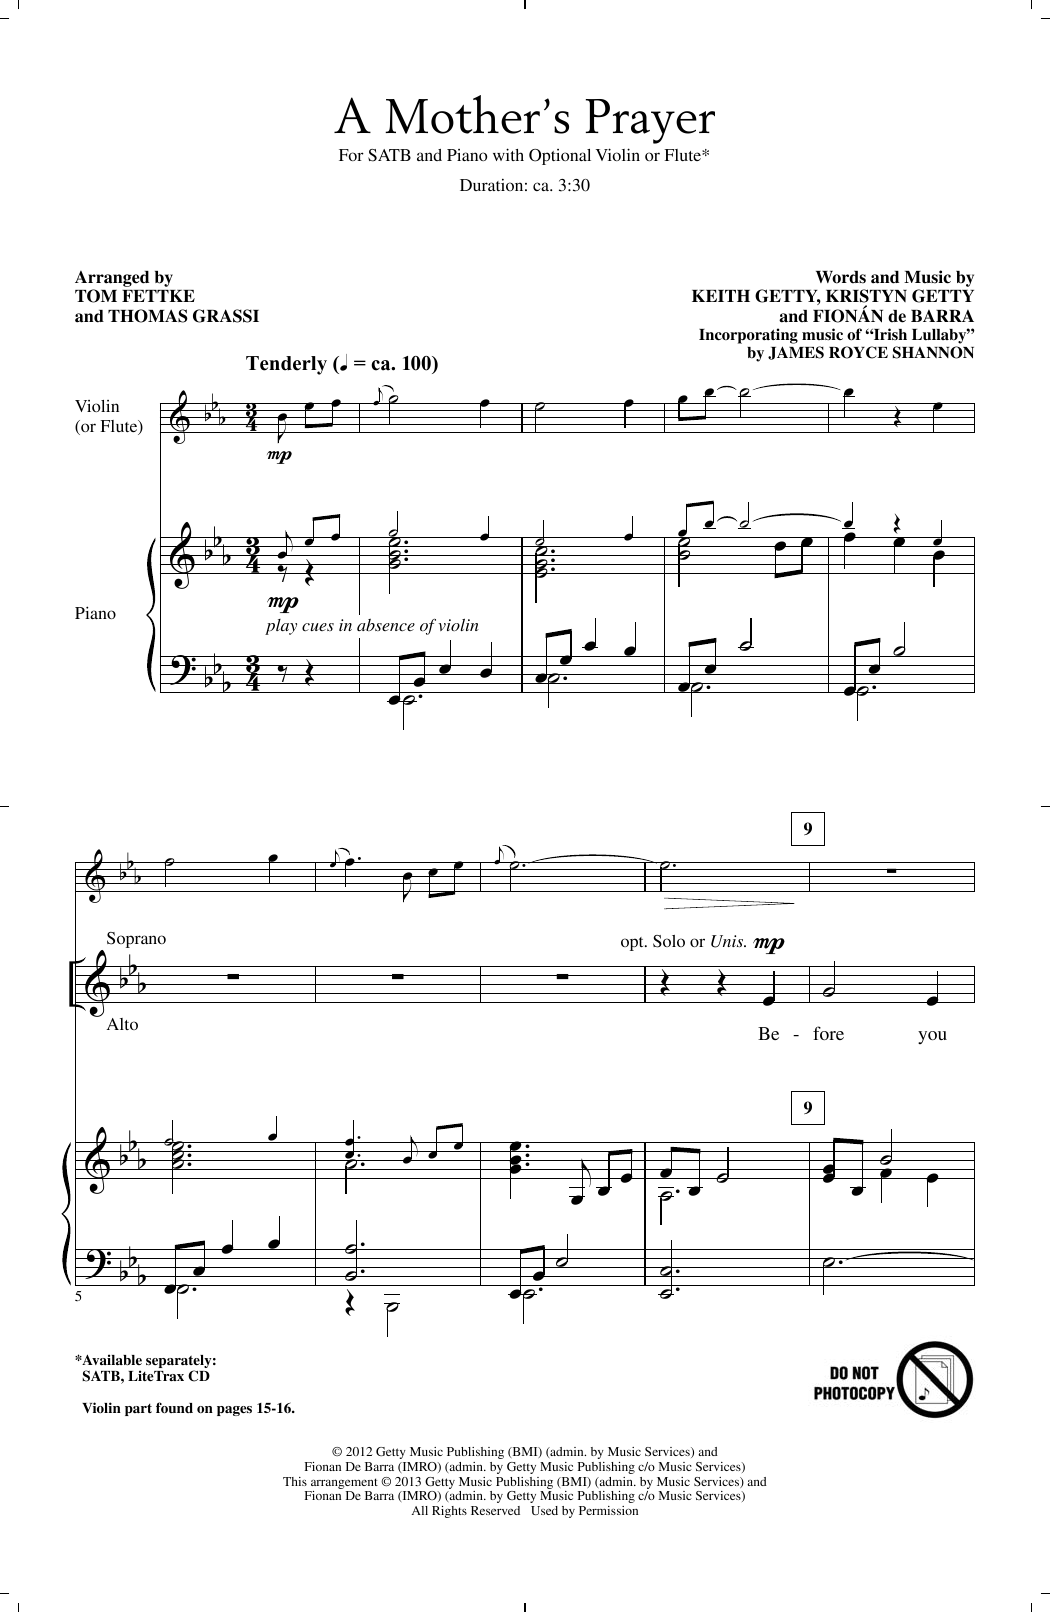 Tom Fettke A Mother's Prayer Sheet Music Notes & Chords for SATB - Download or Print PDF